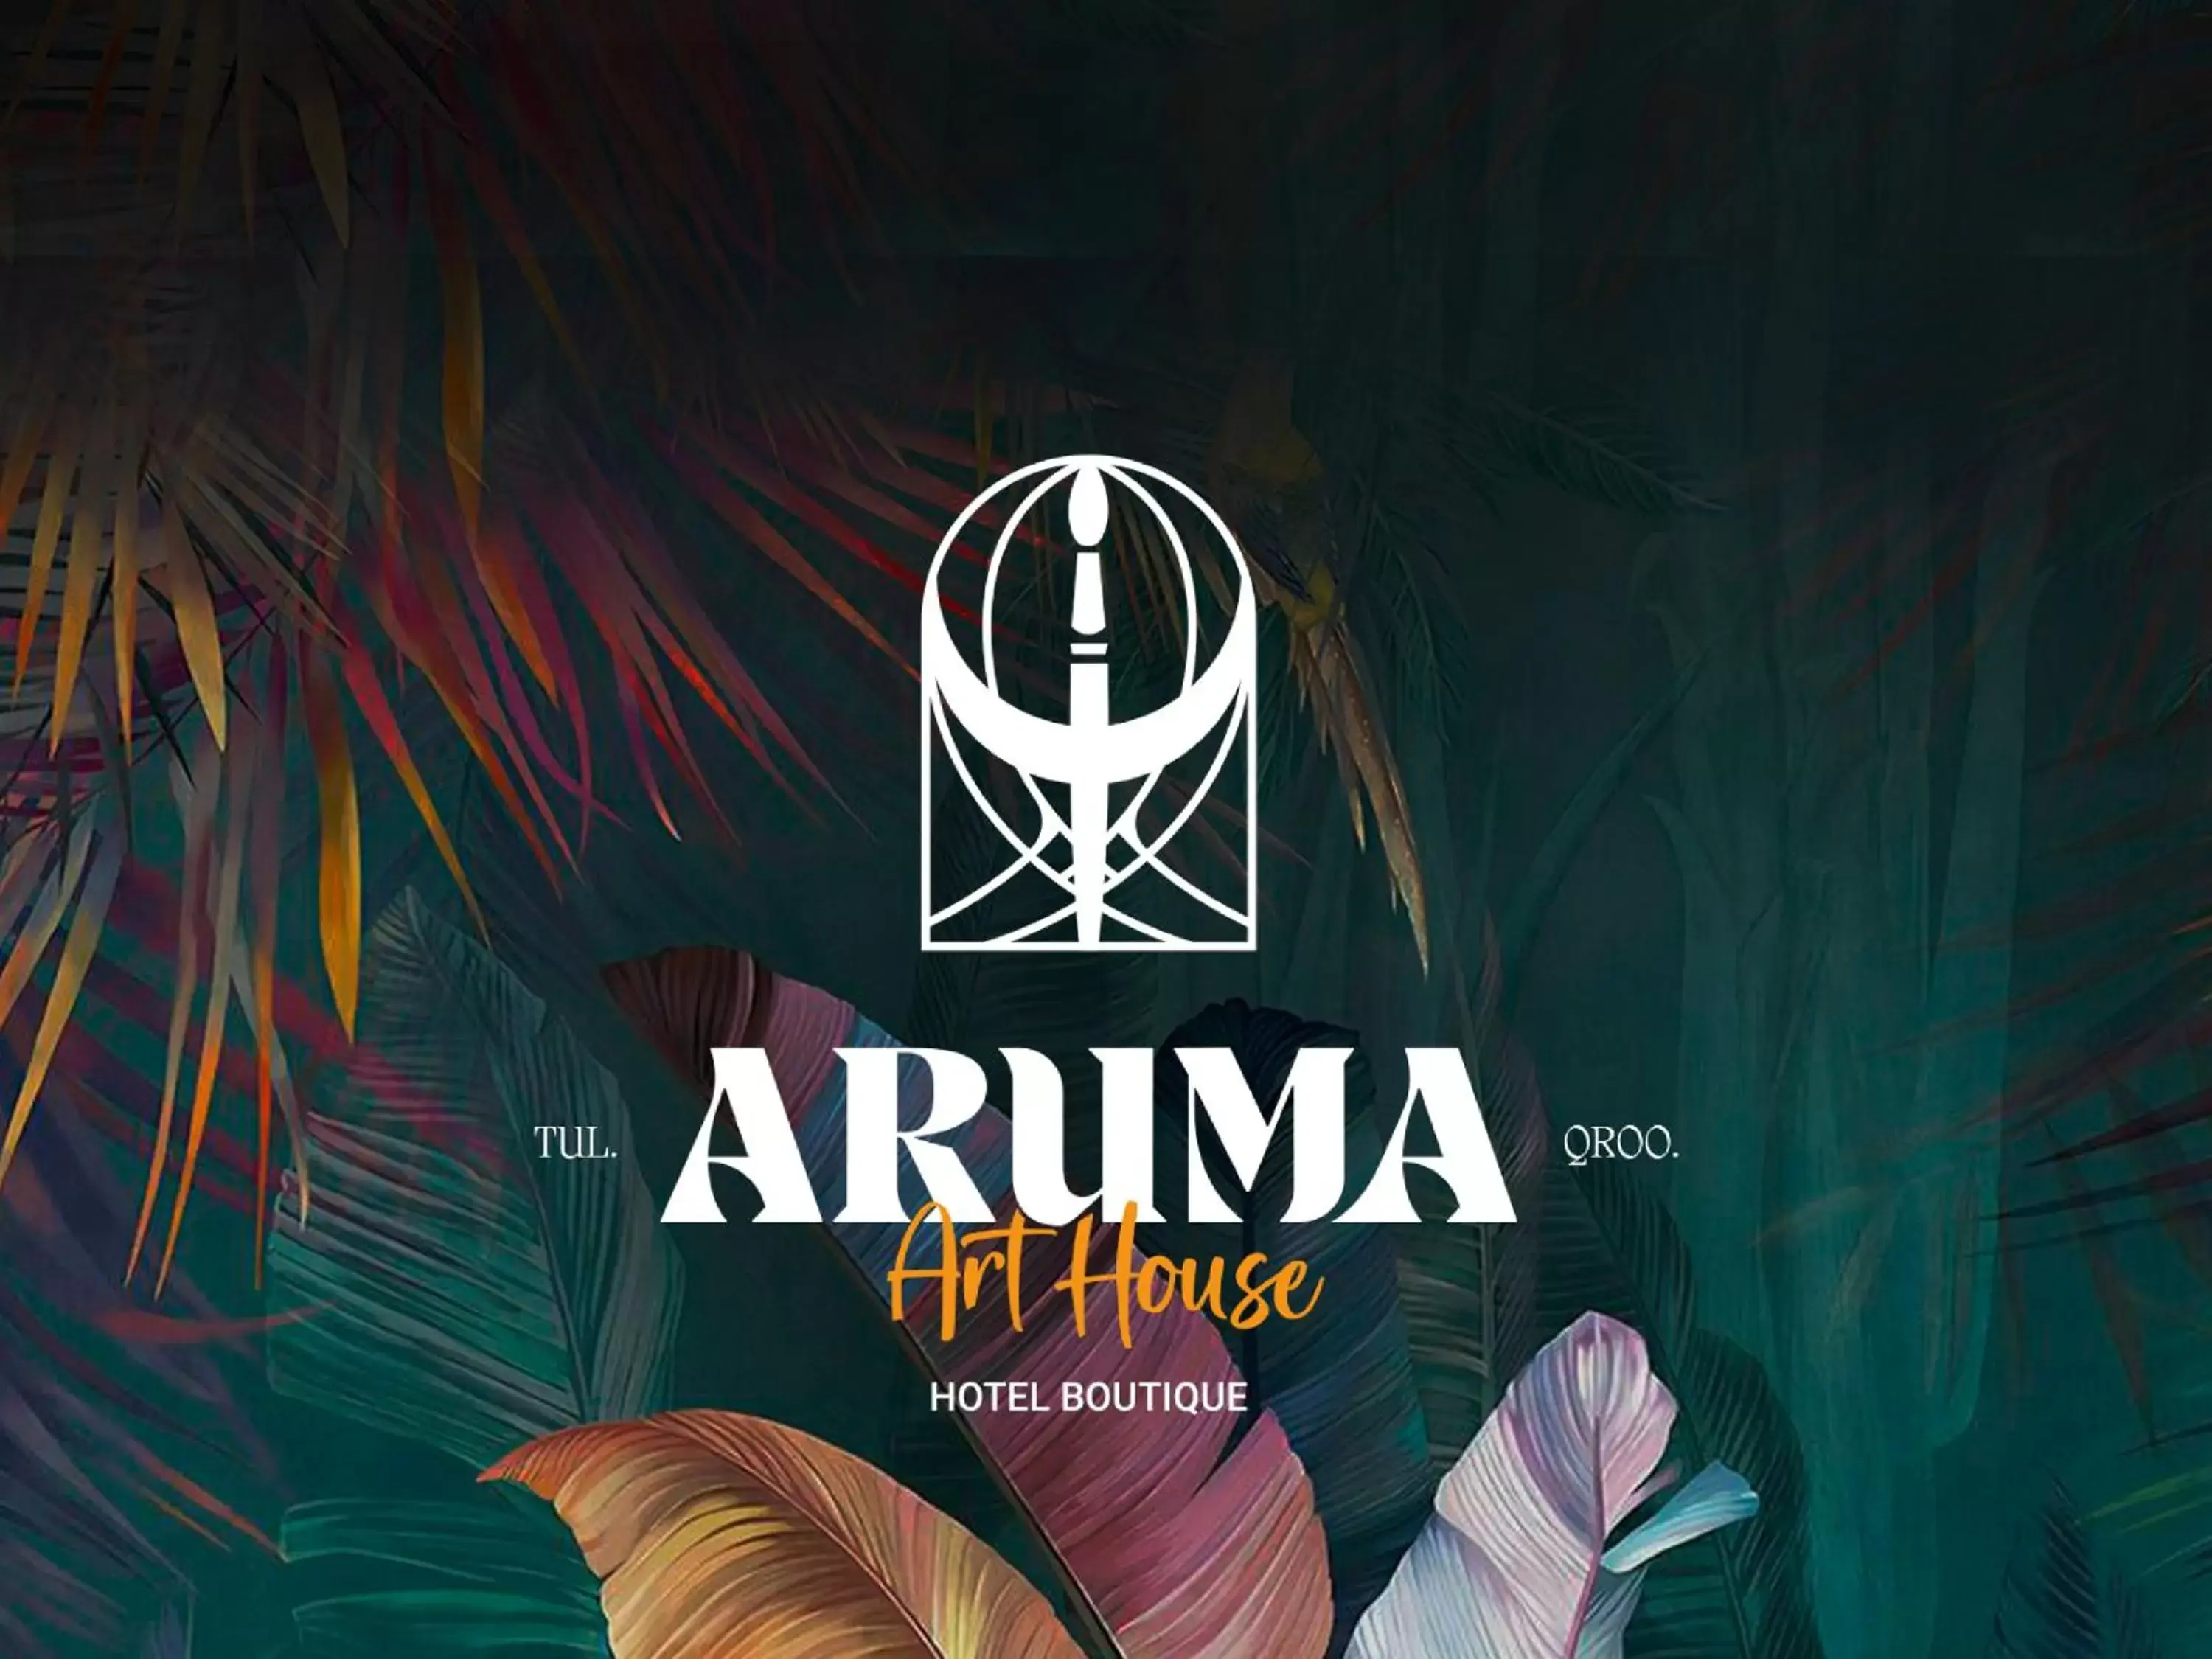 Logo/Certificate/Sign, Property Logo/Sign in Aruma Art House Hotel Boutique